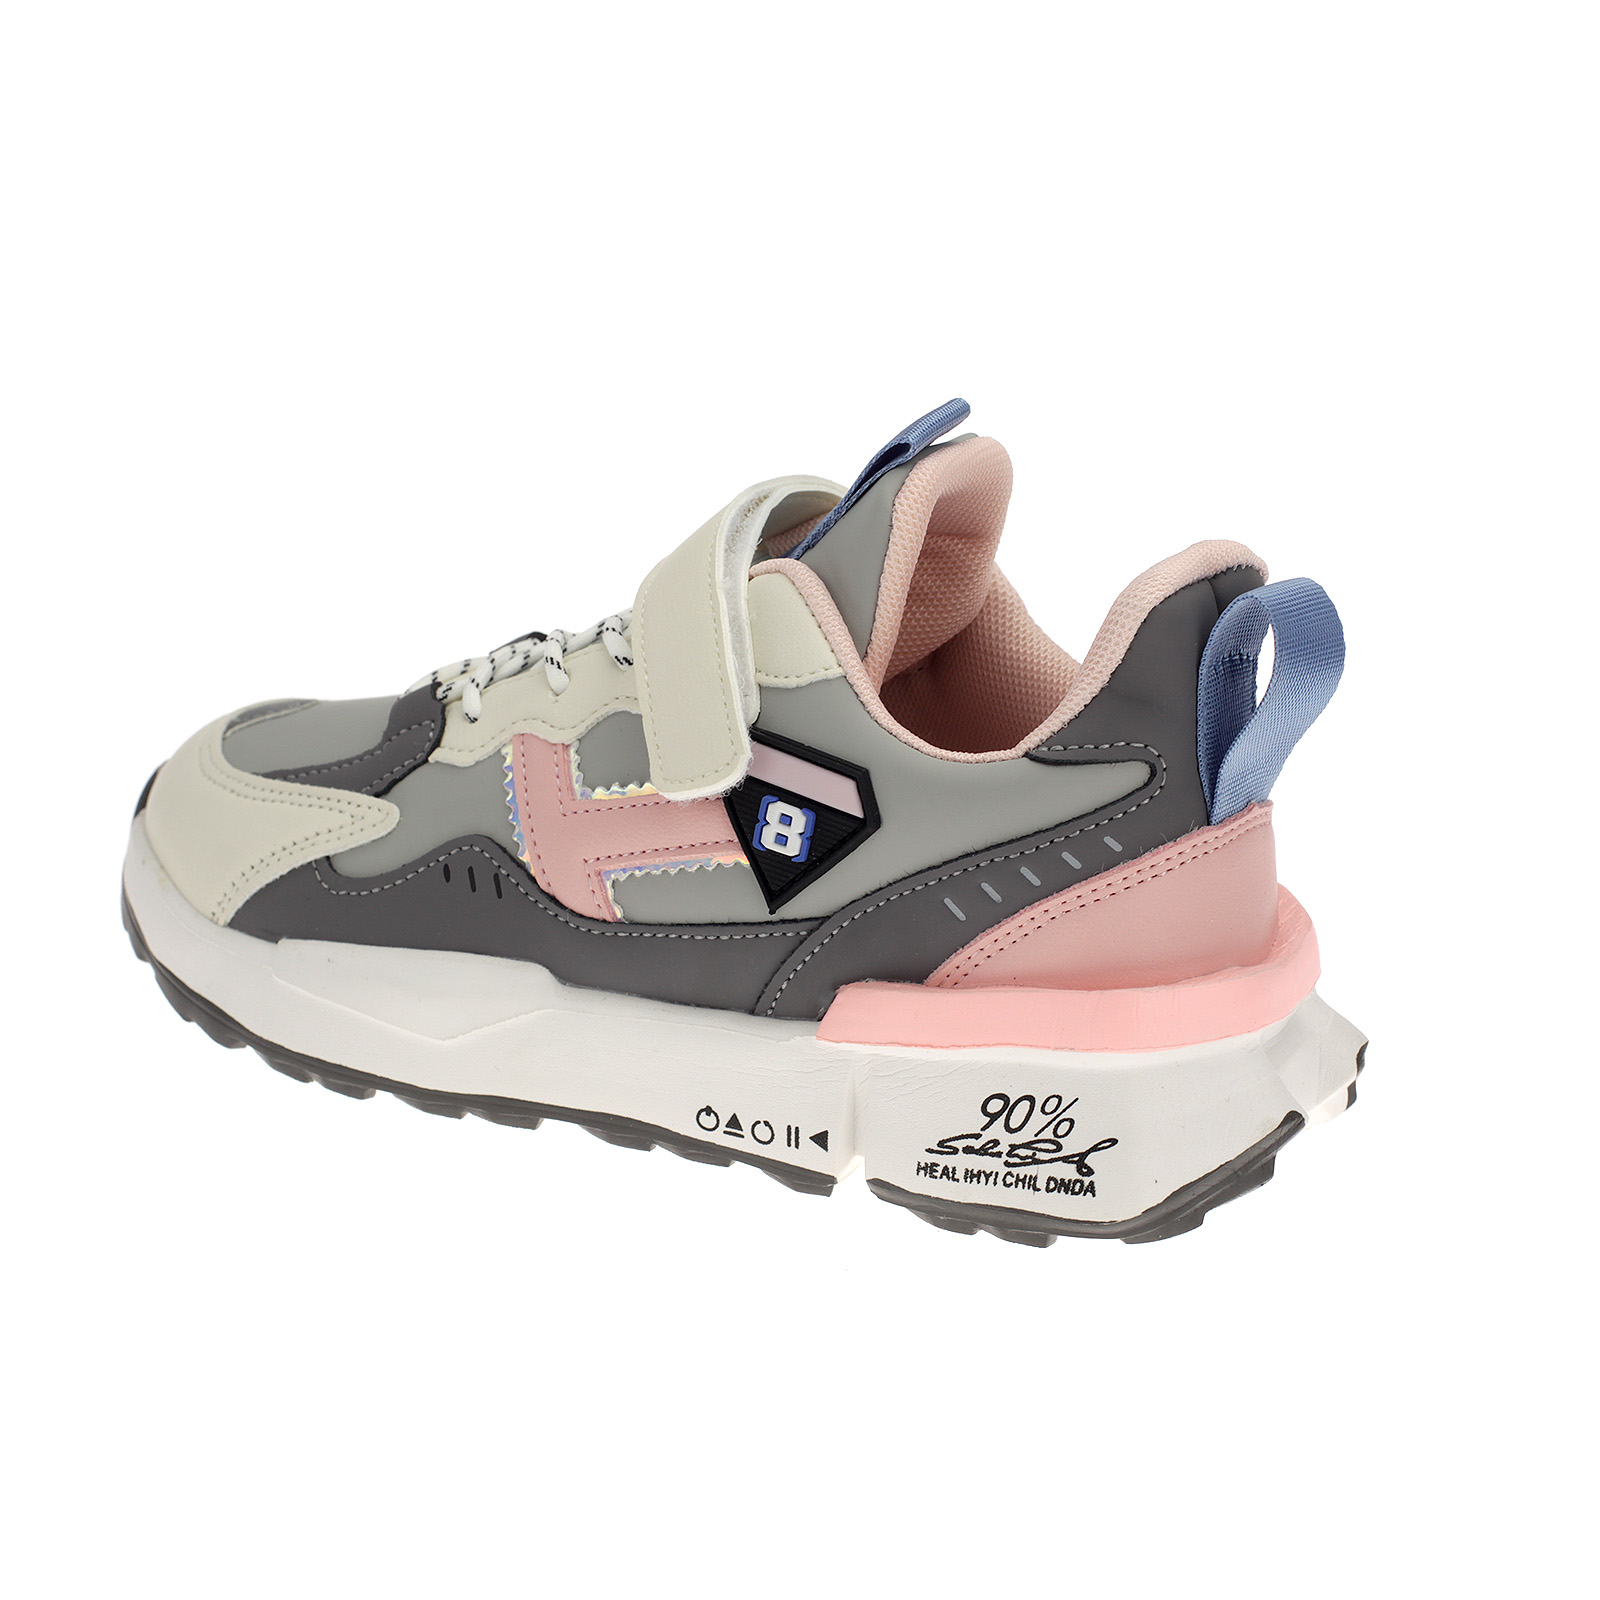 Kinderschuhe Sneaker mit Klettverschluss 4046 Pink Grau